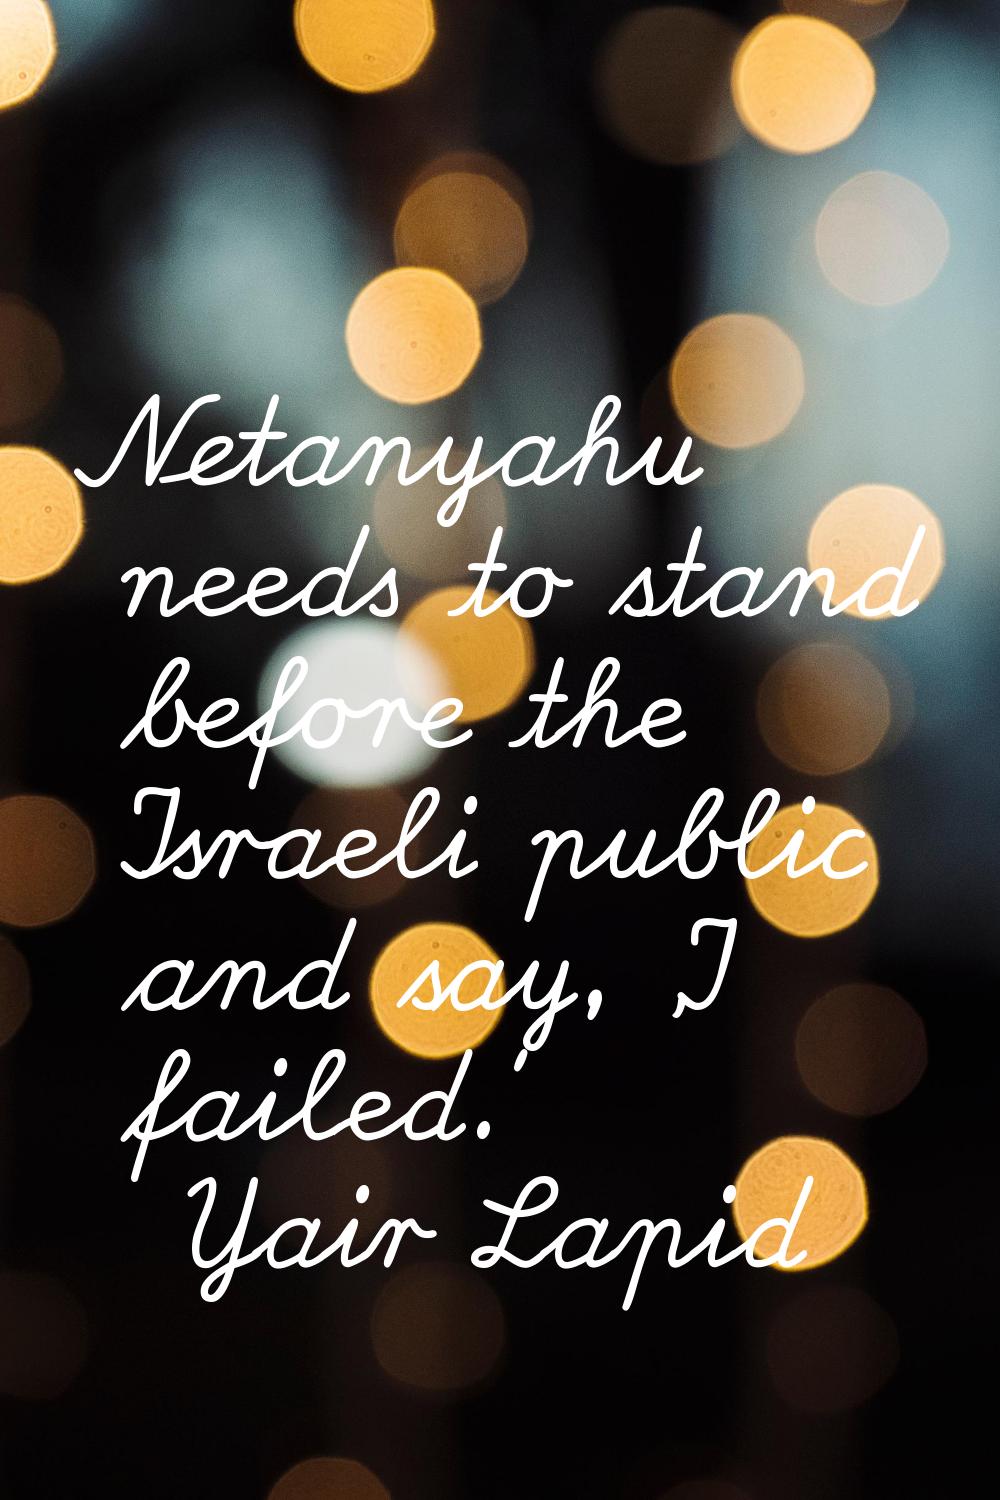 Netanyahu needs to stand before the Israeli public and say, 'I failed.'